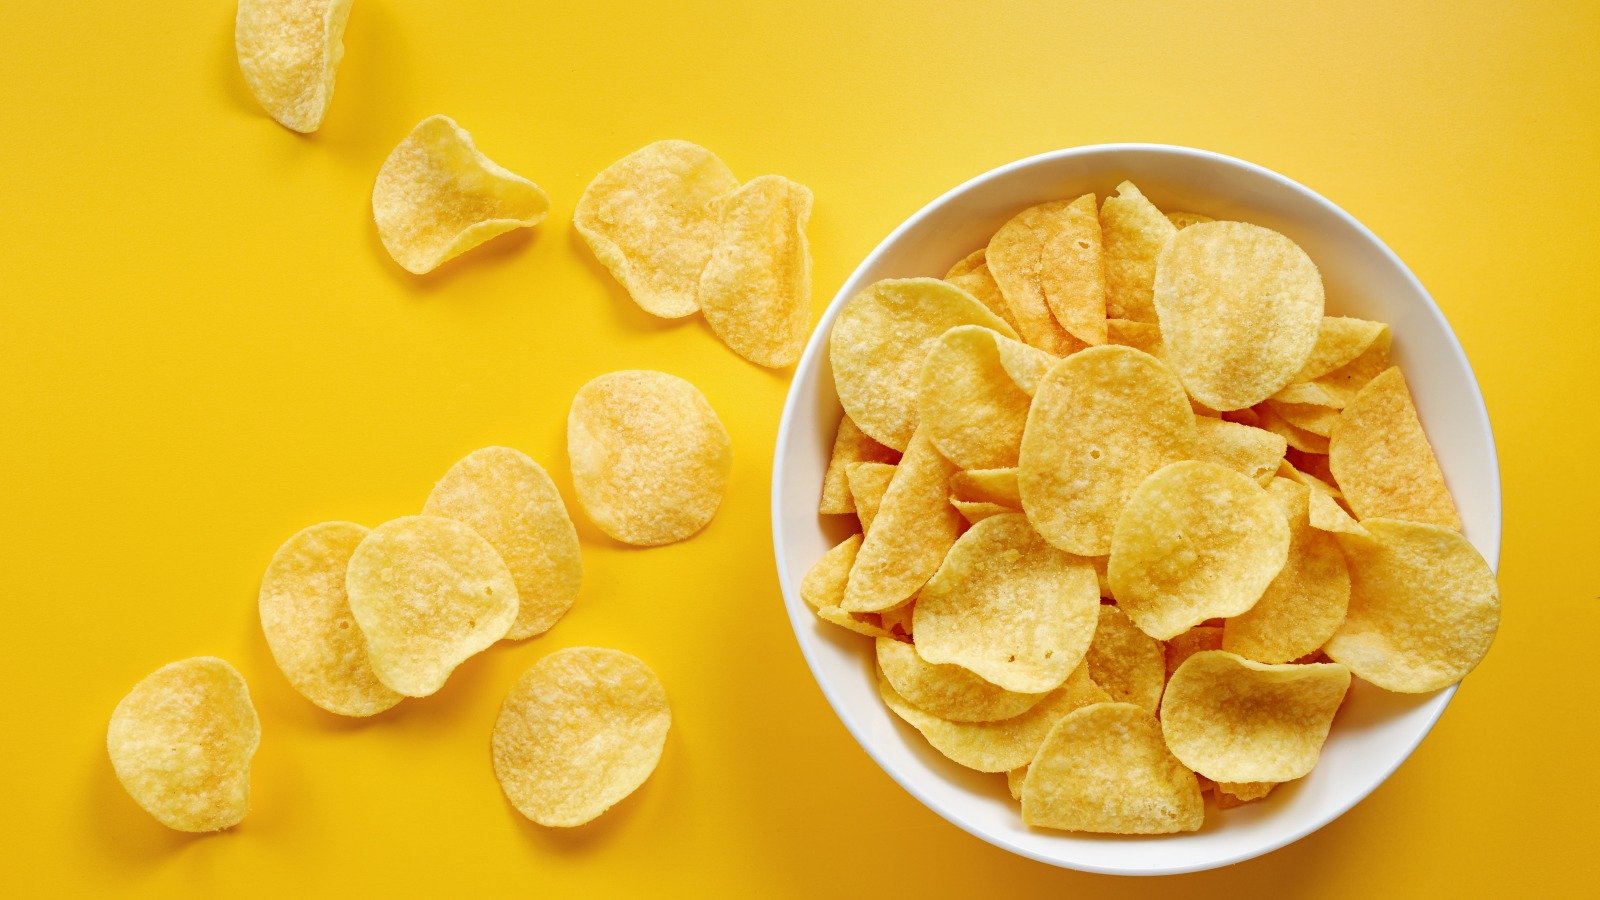 Popular Chip Brands Ranked Worst To Best - Mashed